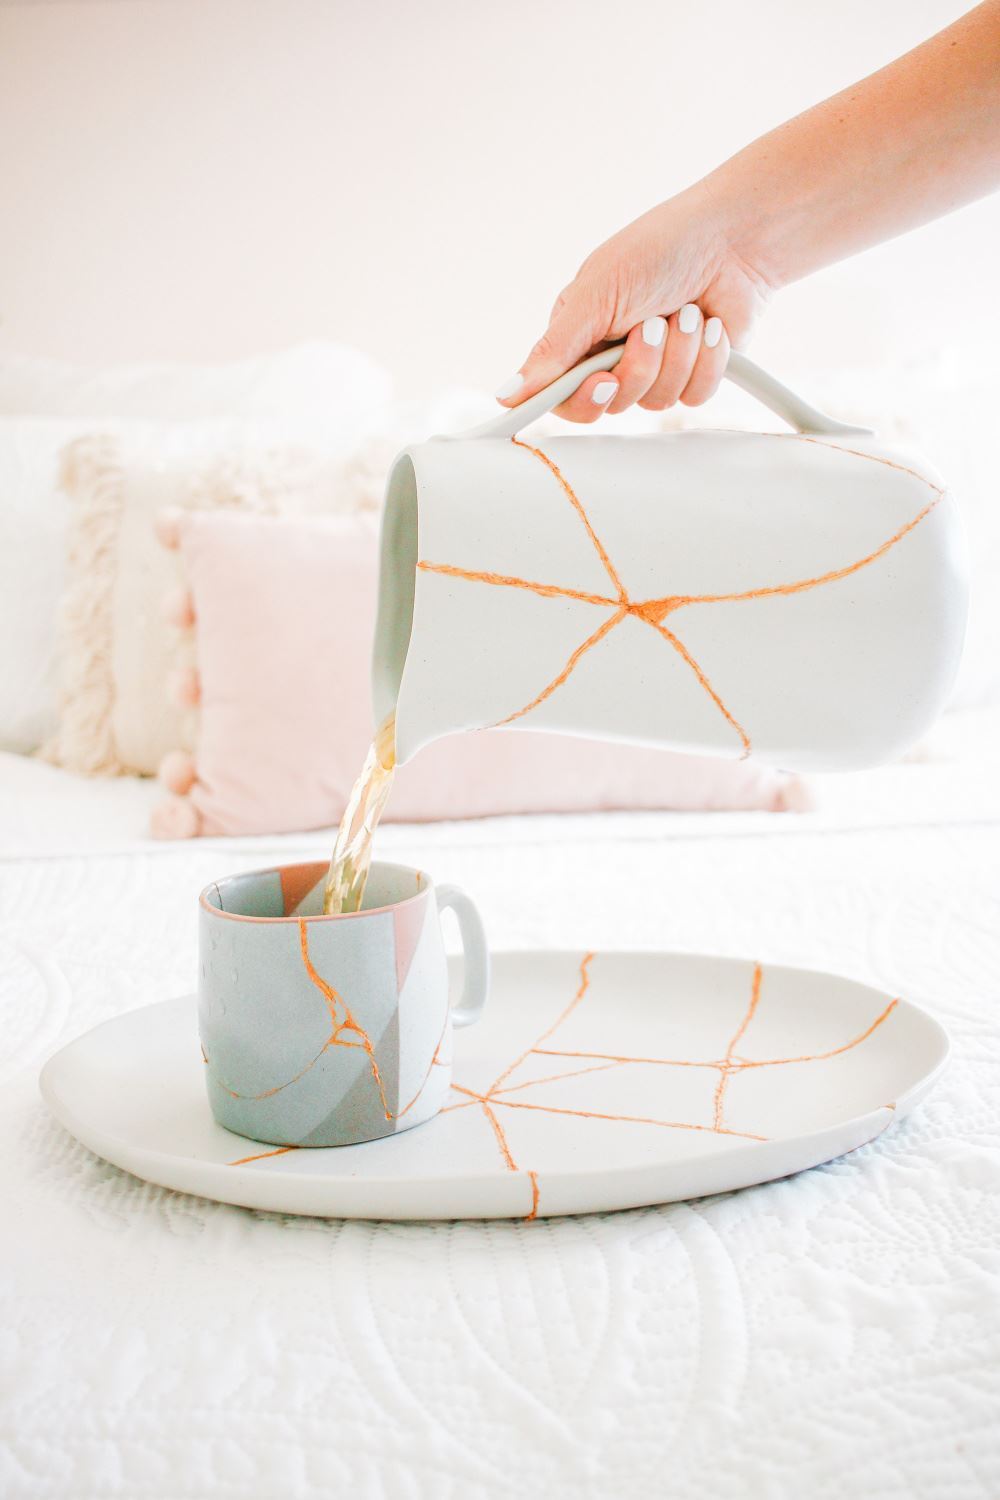 How to Glue Ceramics Back Together: Kintsugi Art